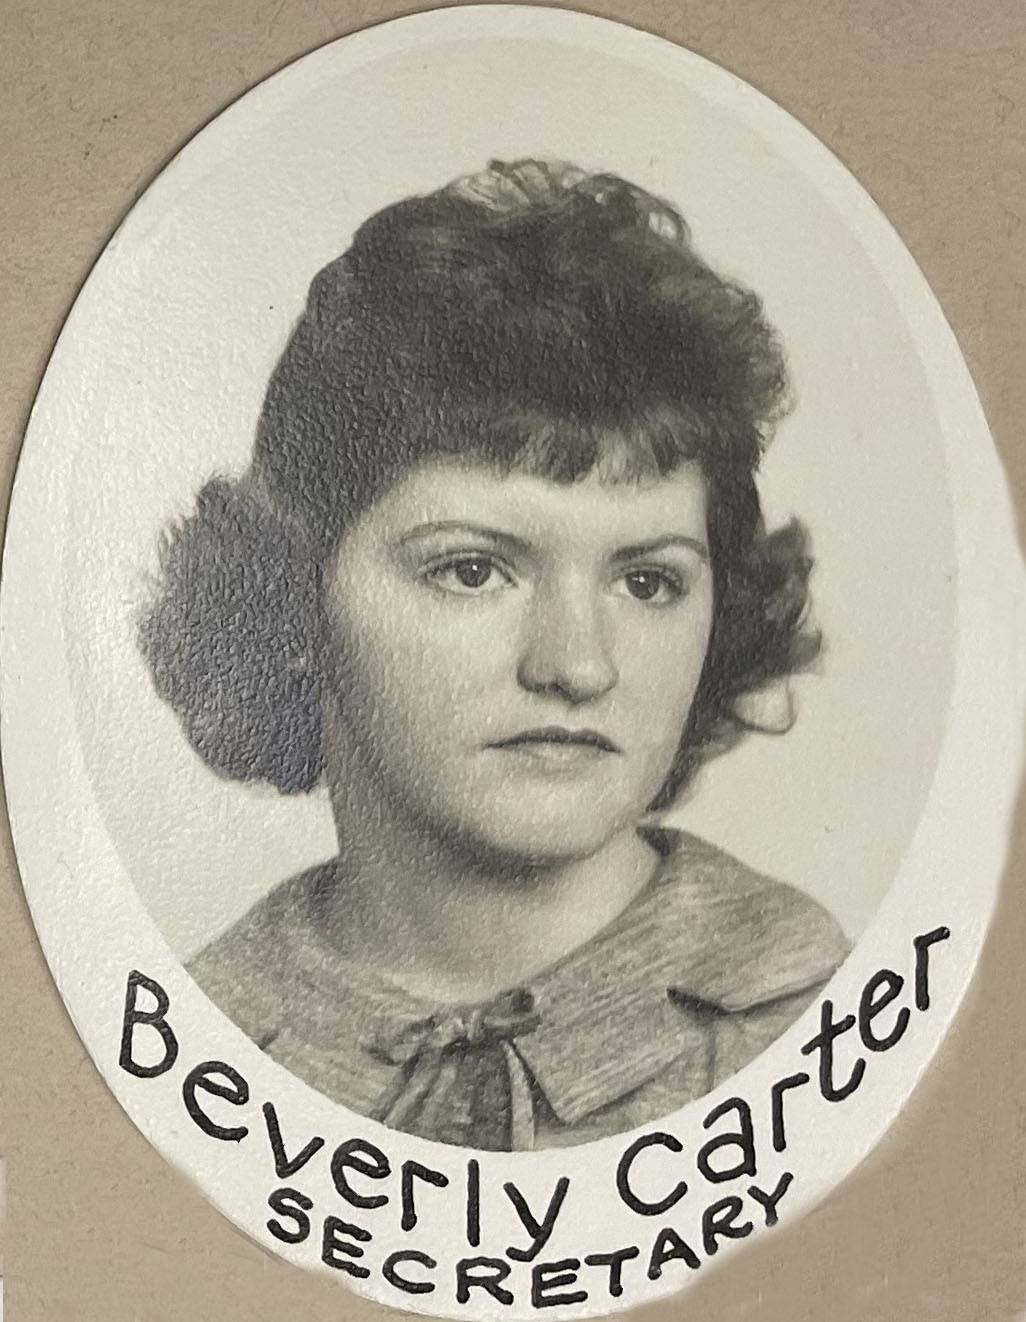 Beverly Carter